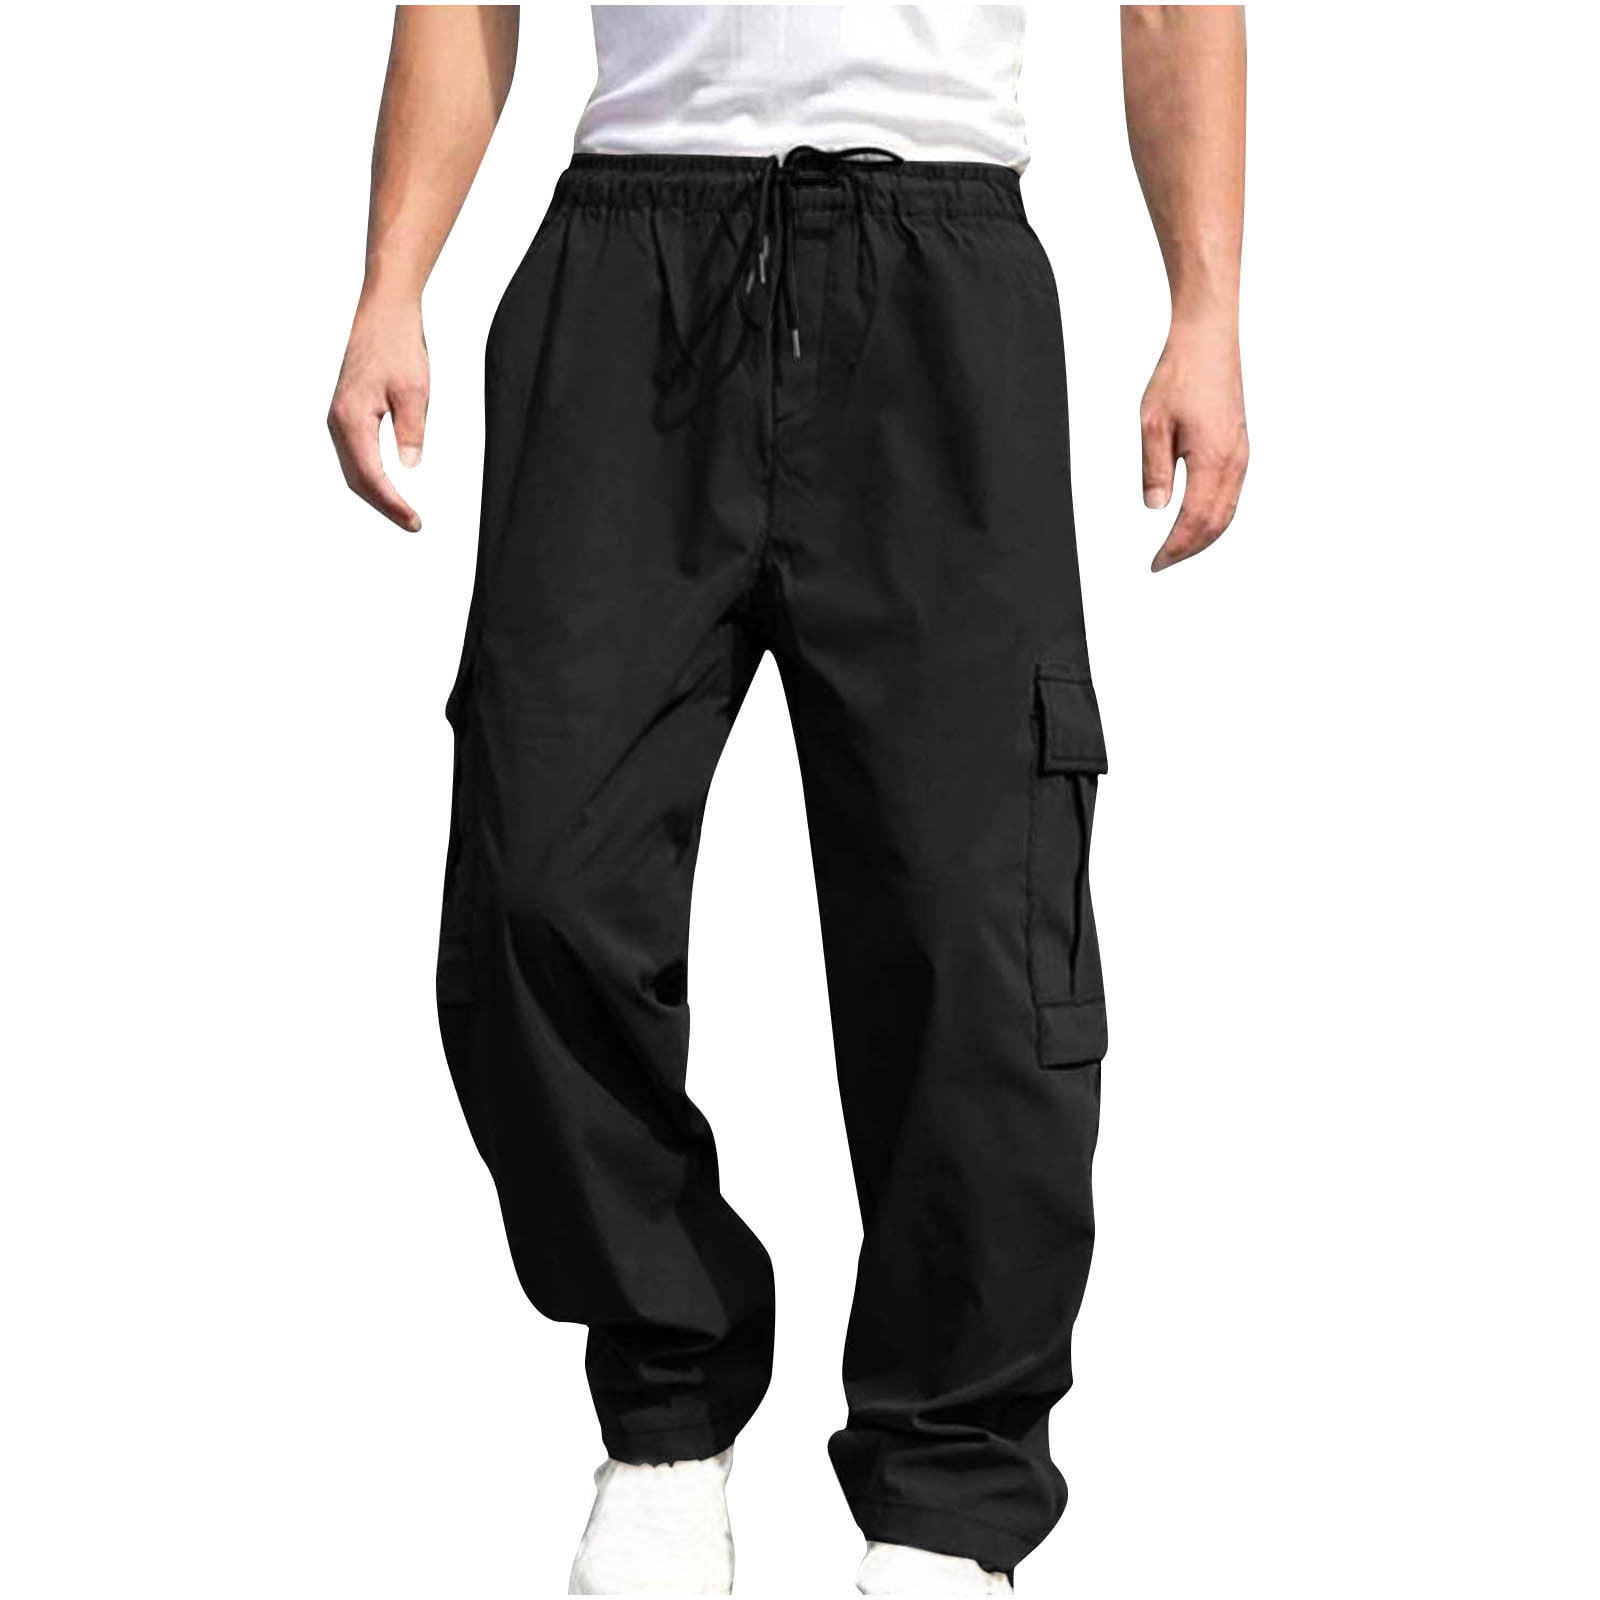 QATAINLAV Cargo Pants for Men Casual Drawstring Work Pants Outdoor Slim ...